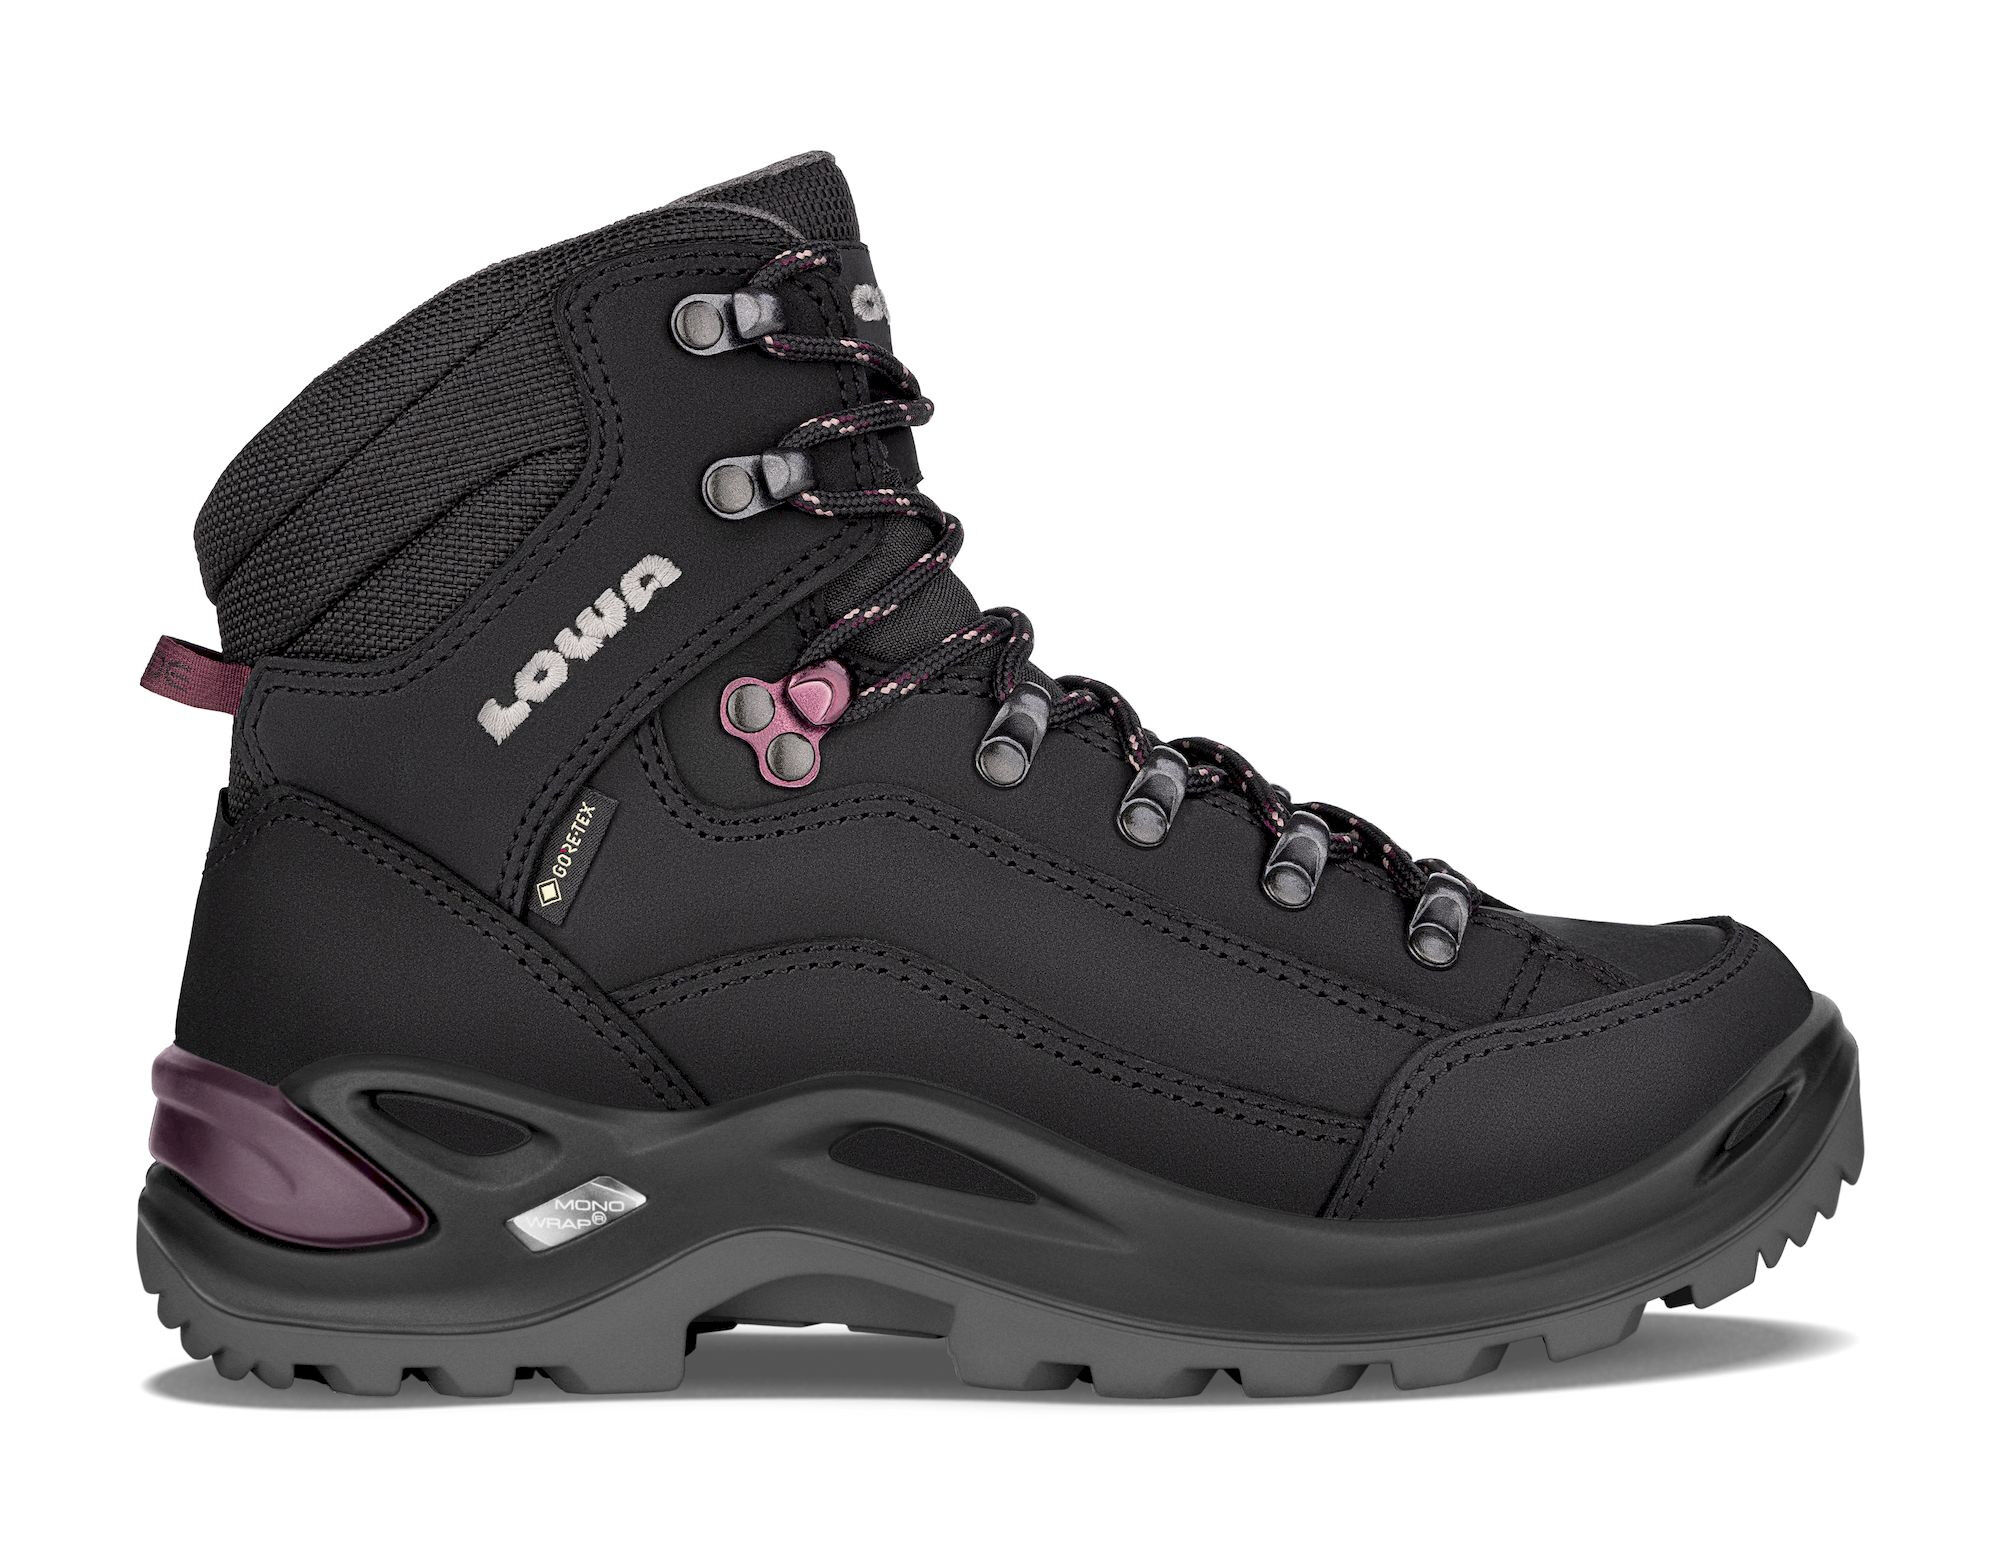 Lowa - Renegade GTX® Mid Ws - Walking Boots - Women's